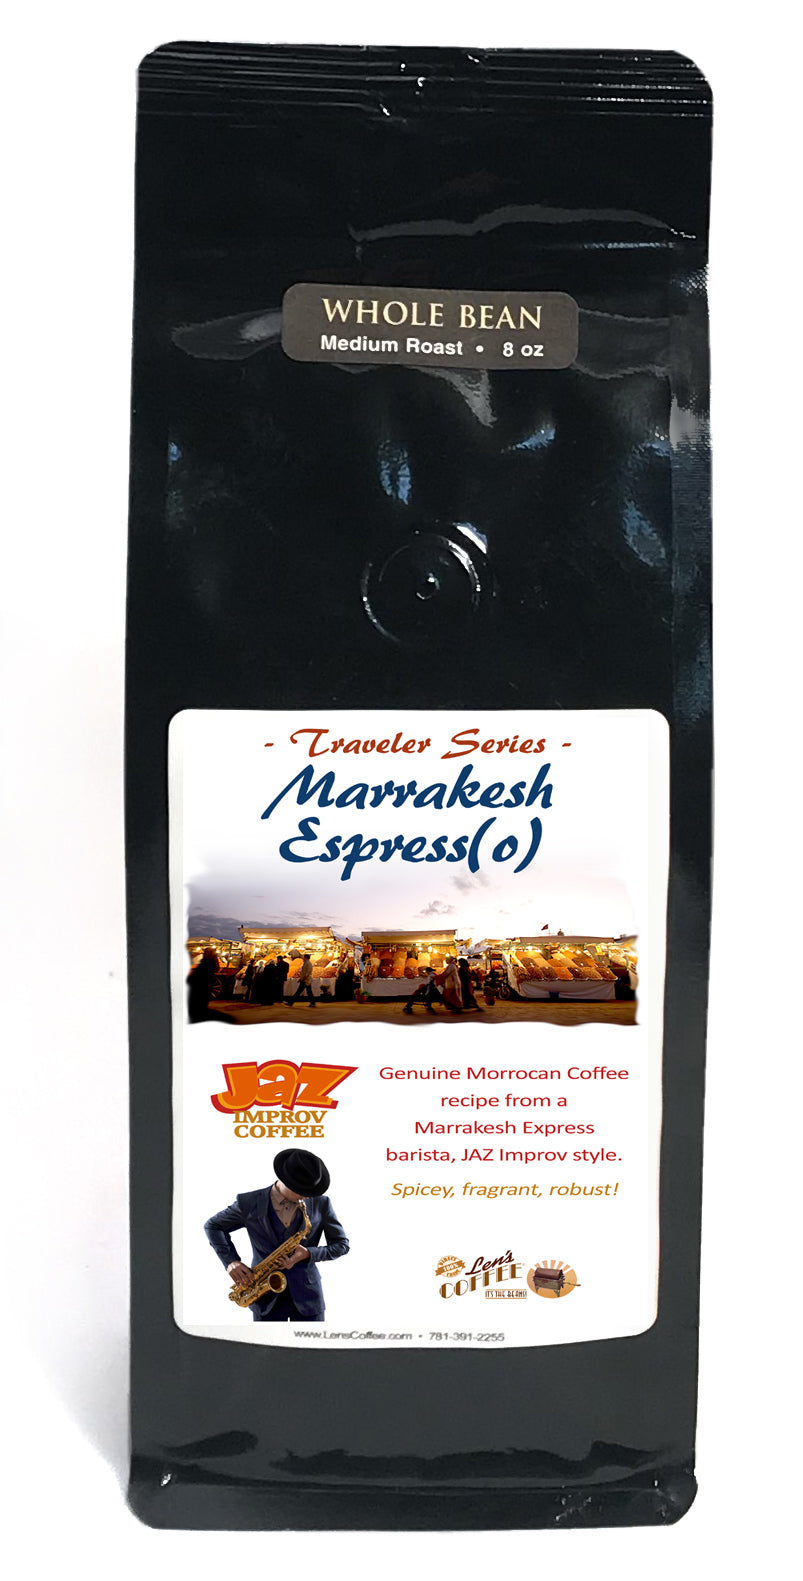 JAZ Improv Coffee : Traveler Series : Marrakesh Espress(o)